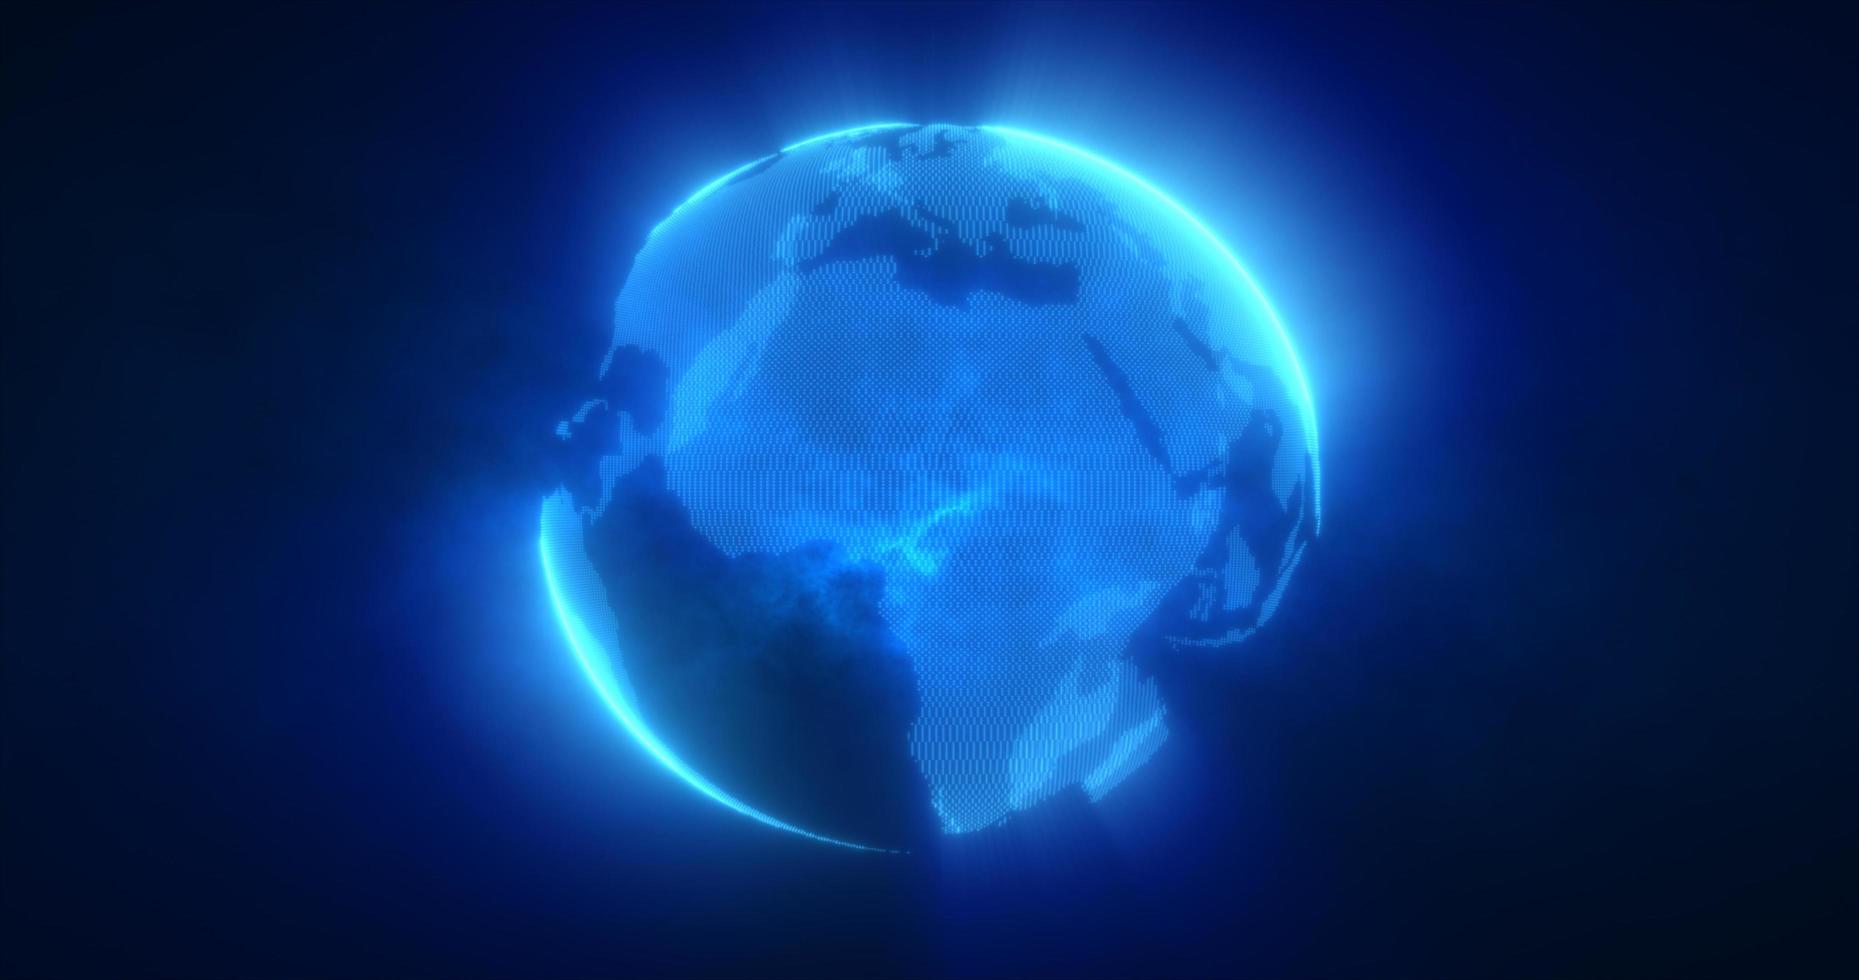 planeta azul abstrato girando com partículas futuristas de alta tecnologia energia mágica brilhante, fundo abstrato foto